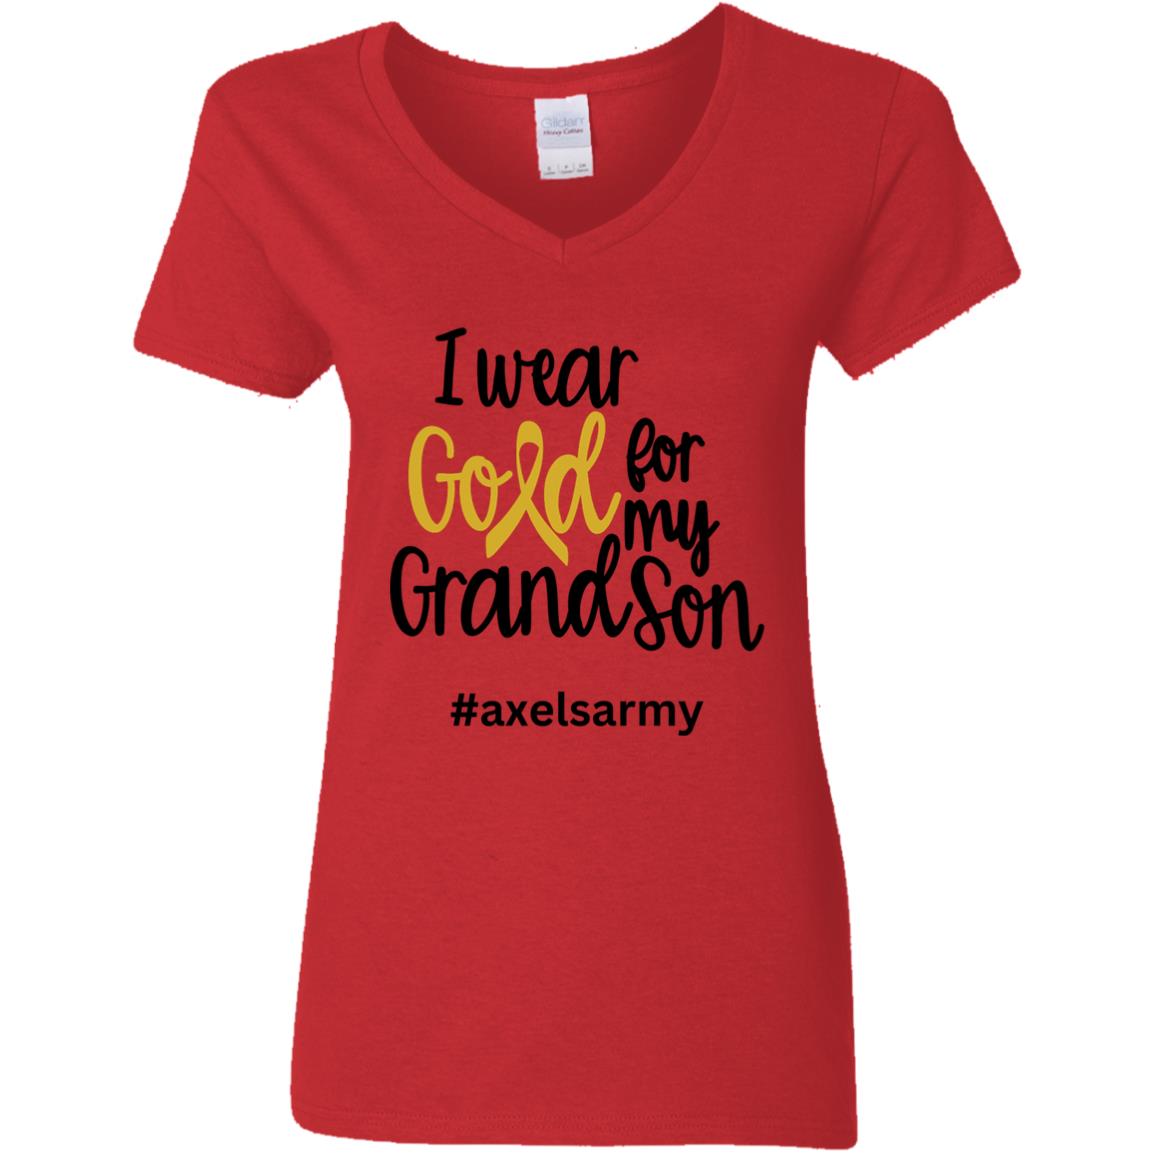 Axel’s Army Grandson Ladies' 5.3 oz. V-Neck T-Shirt